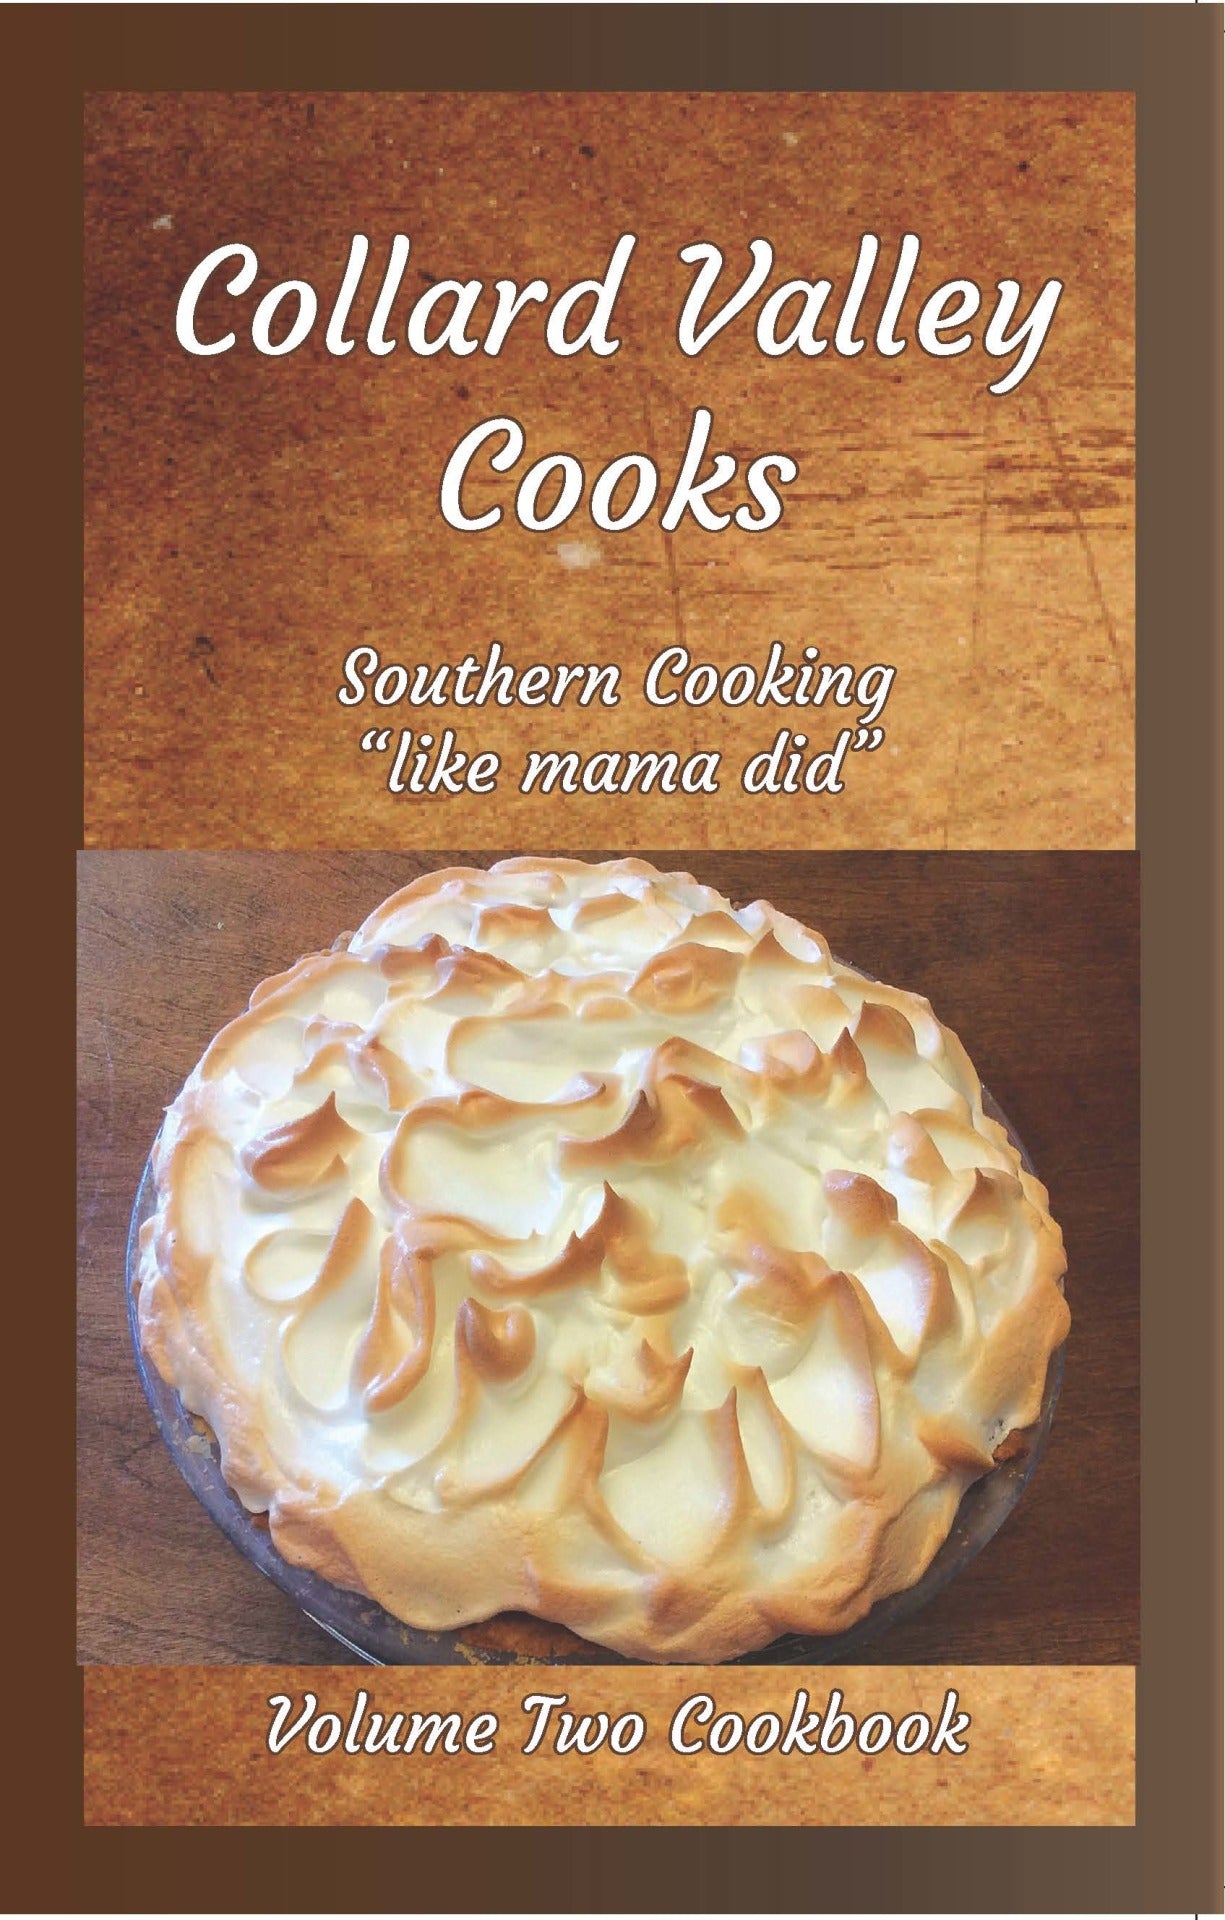 Volume 2 Cookbook Collard Valley Cooks